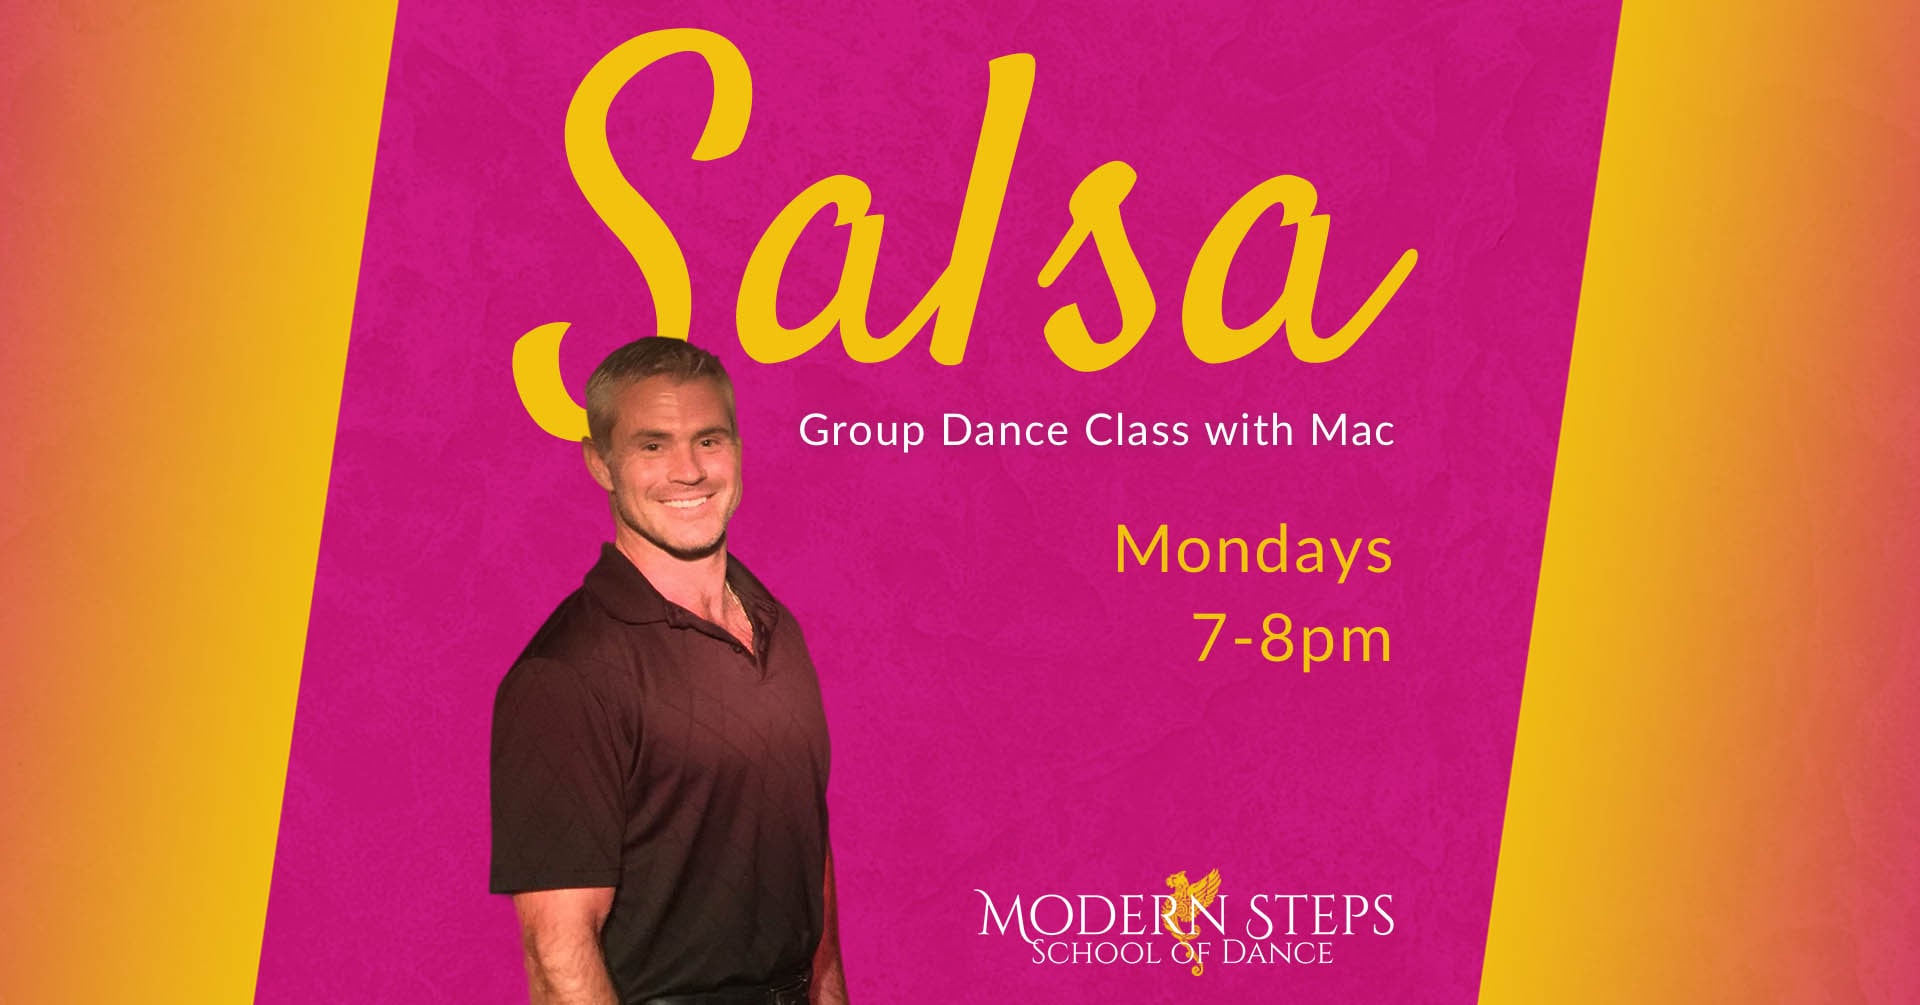 Modern Steps School of Dance Naples Florida The Salsa Dance Classes - Group Ballroom Dance Lessons